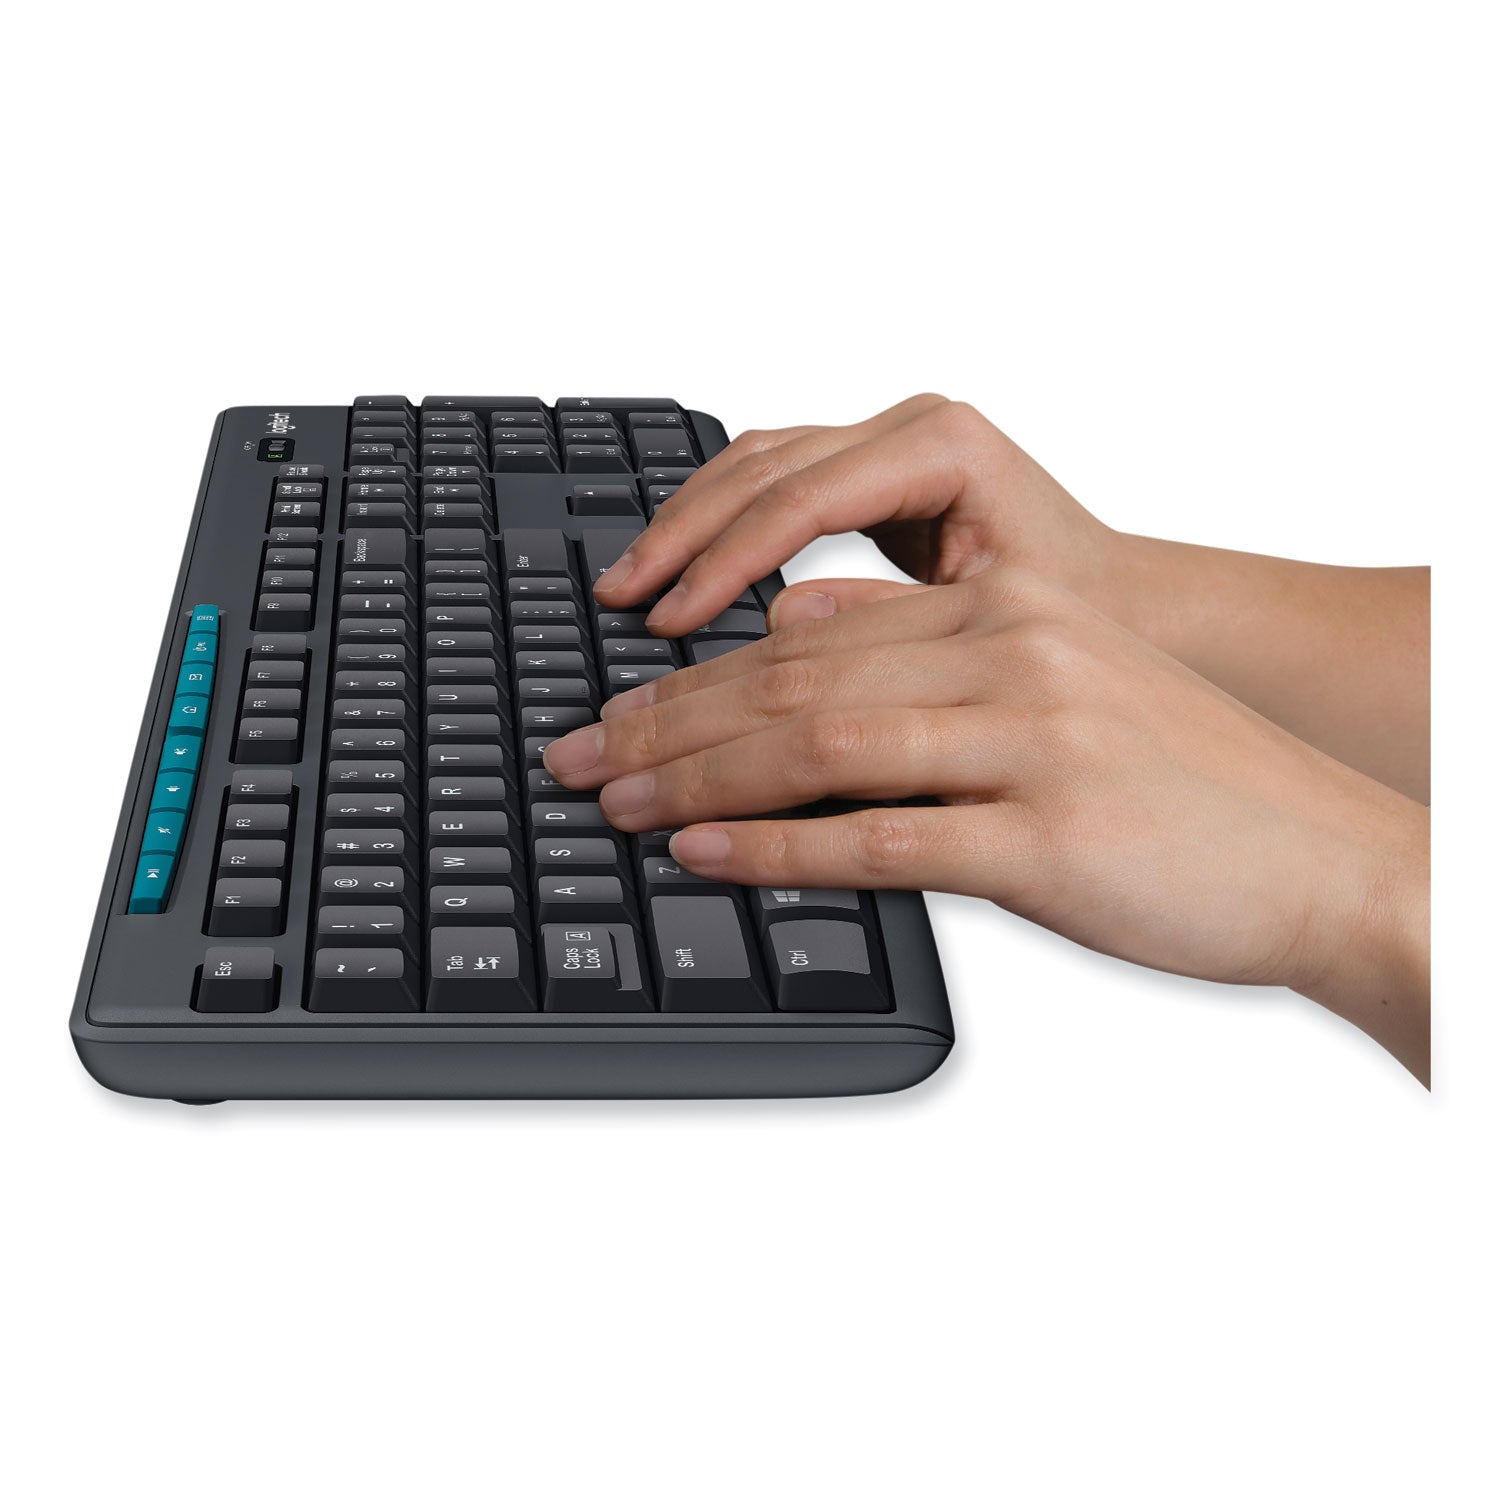 K270 Wireless Keyboard, USB Unifying Receiver, Black - 